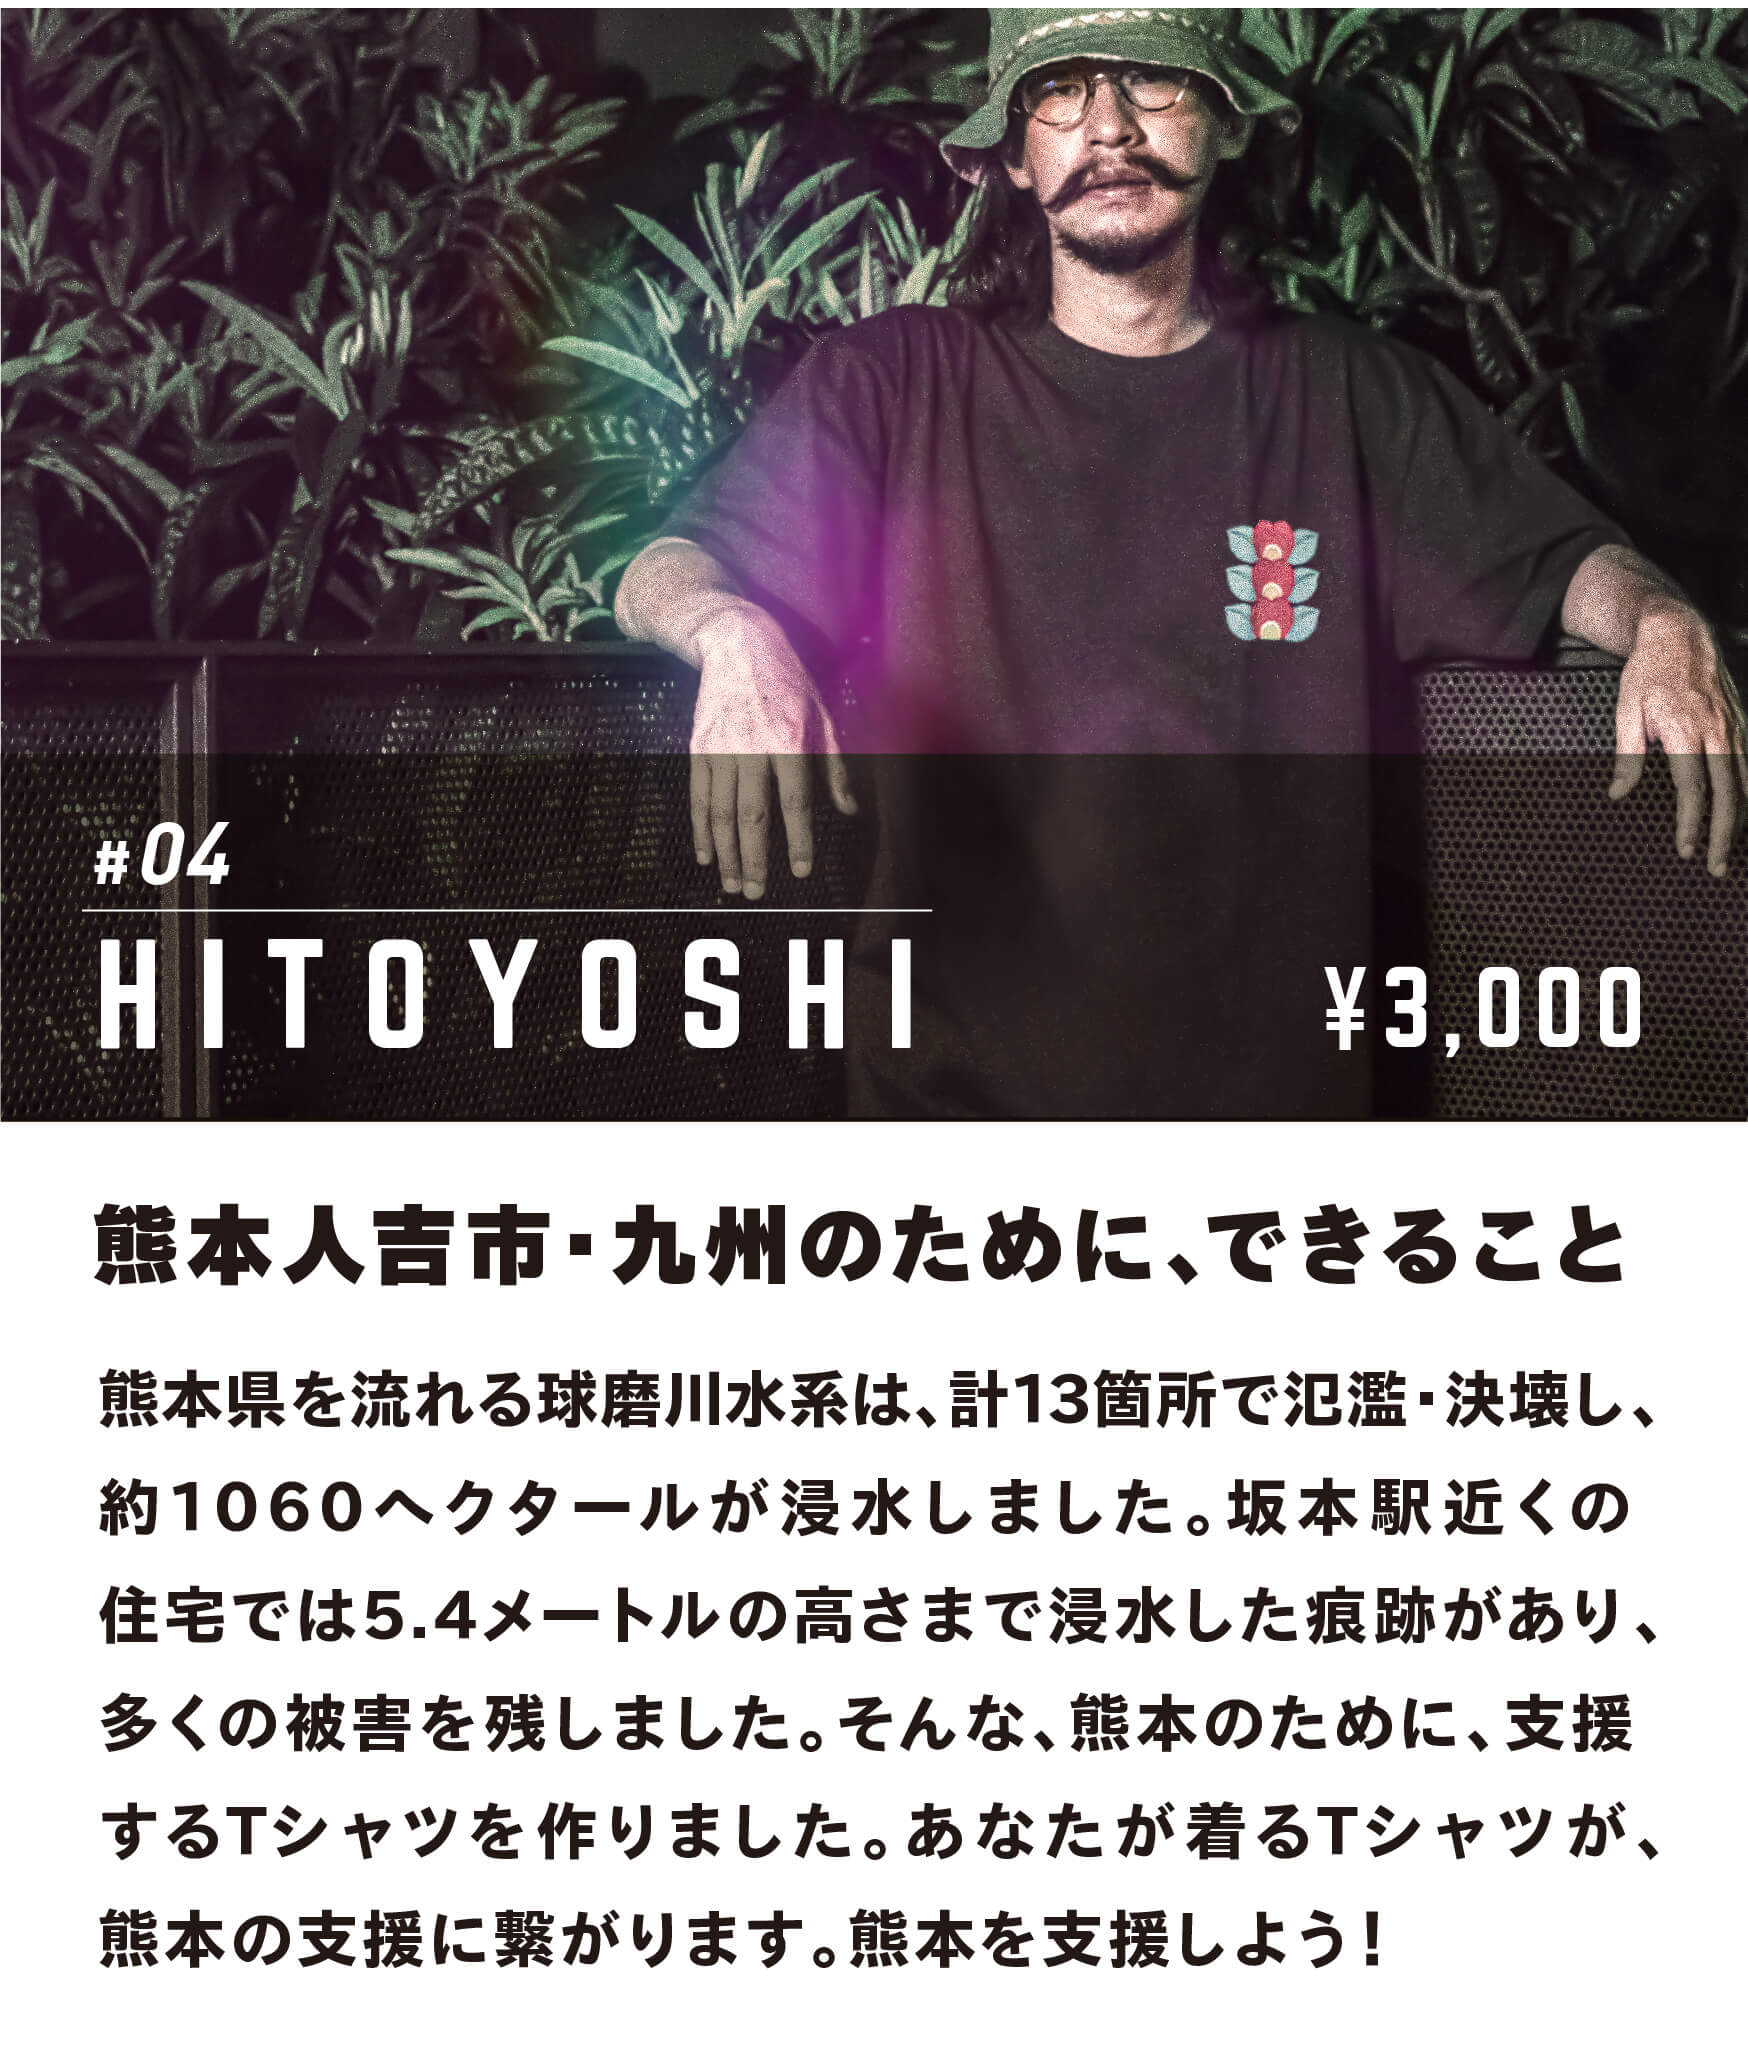 「#04 Hitoyoshi」について